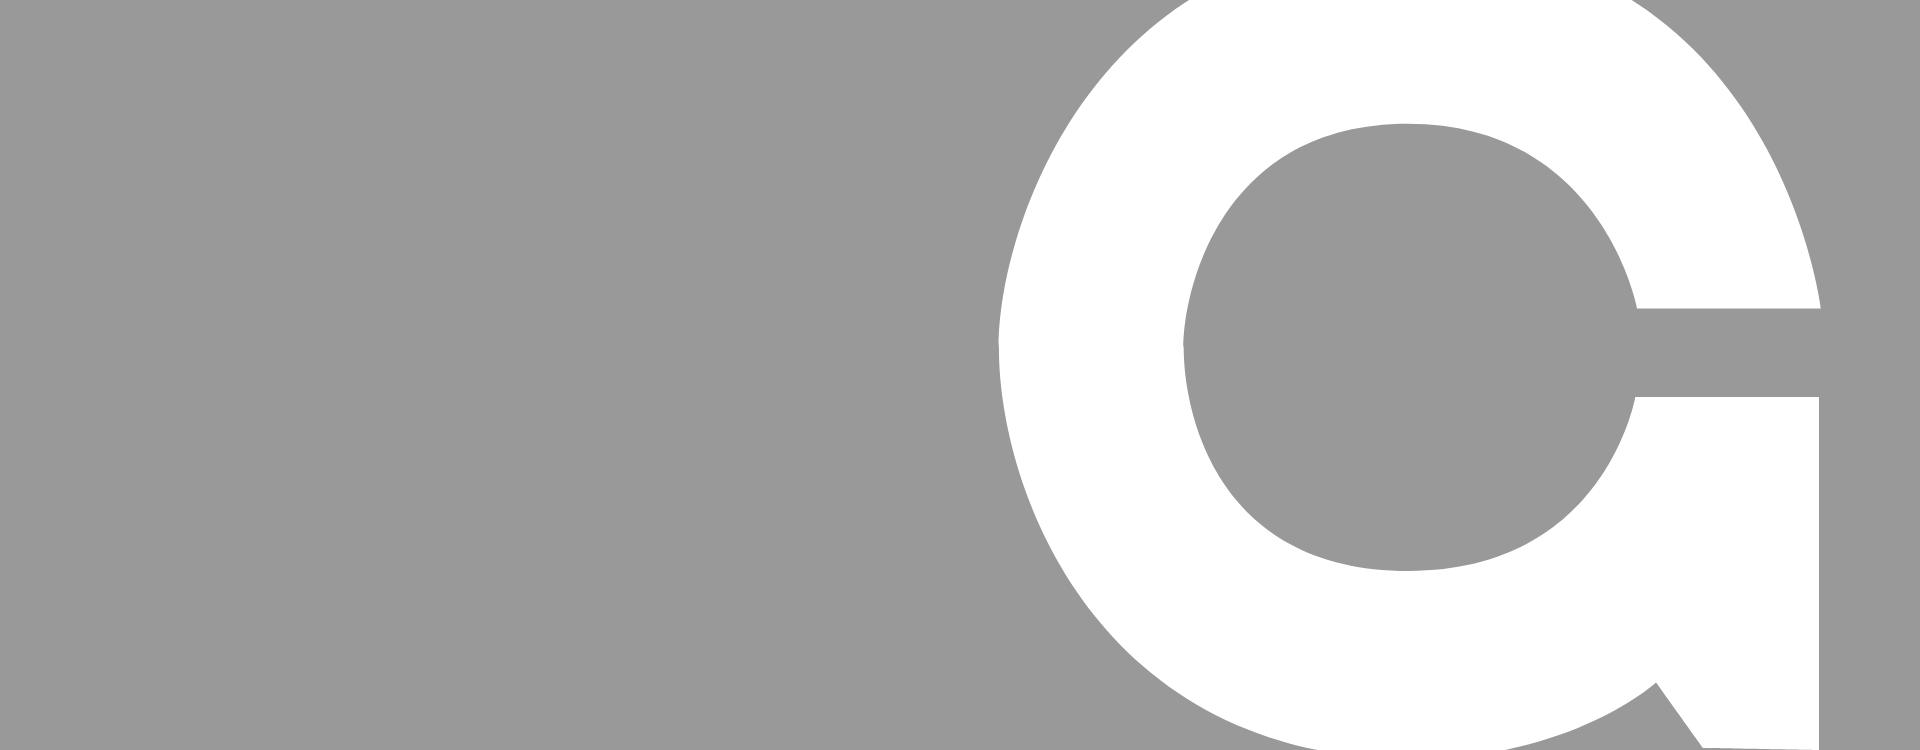 G symbol overlay